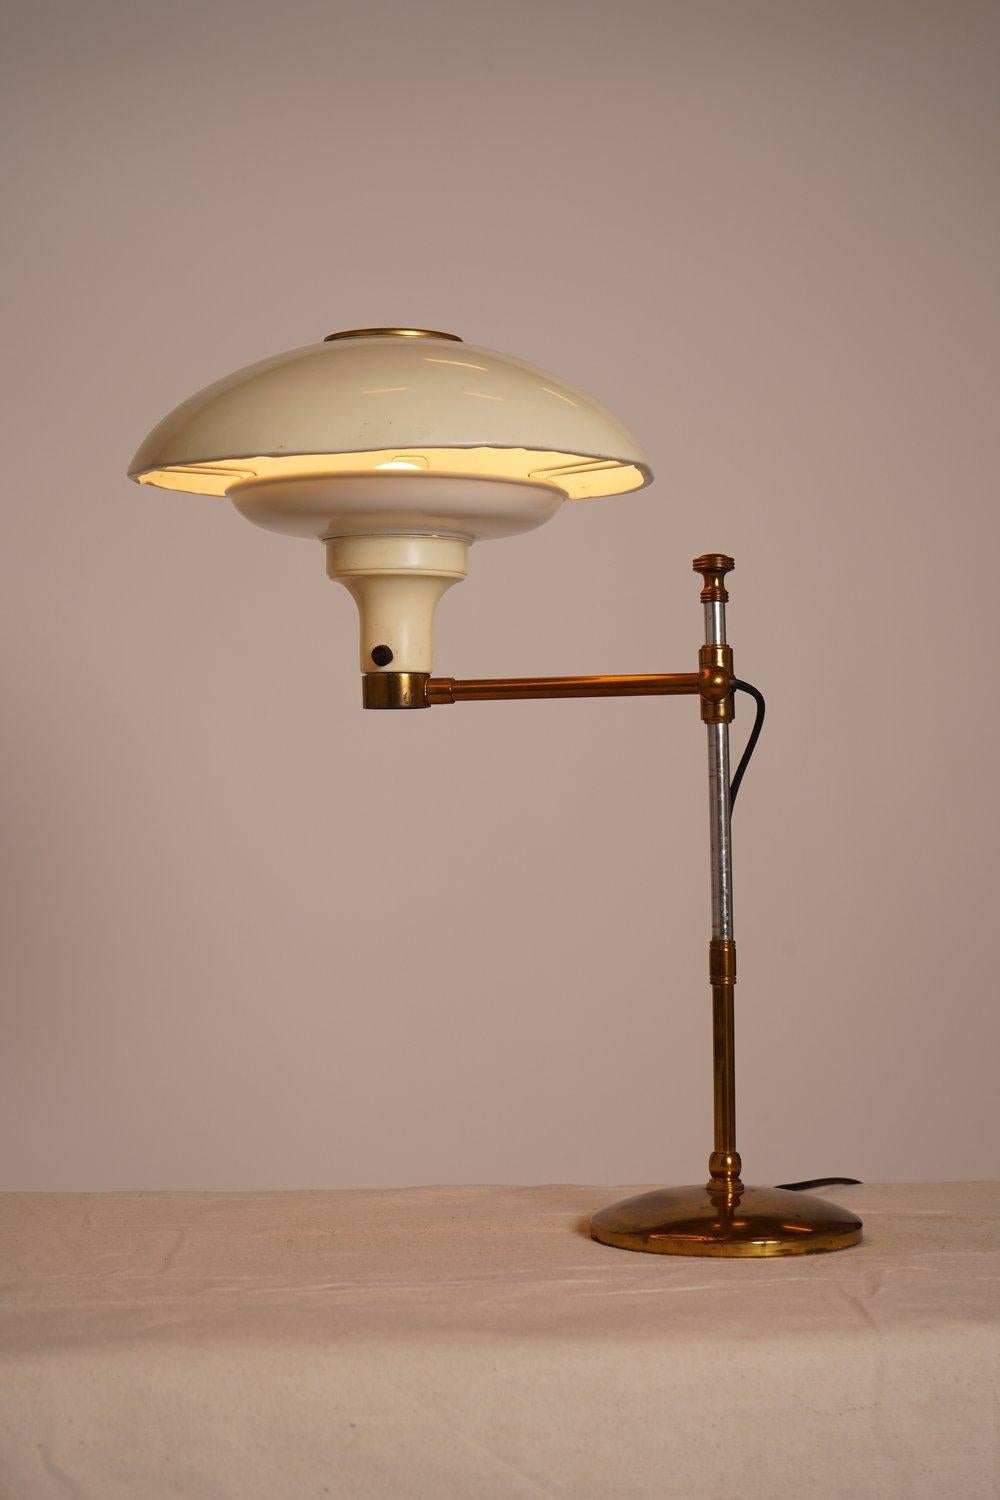 20th Century Art Deco Dazor Swing Arm Brass Desk Lamp